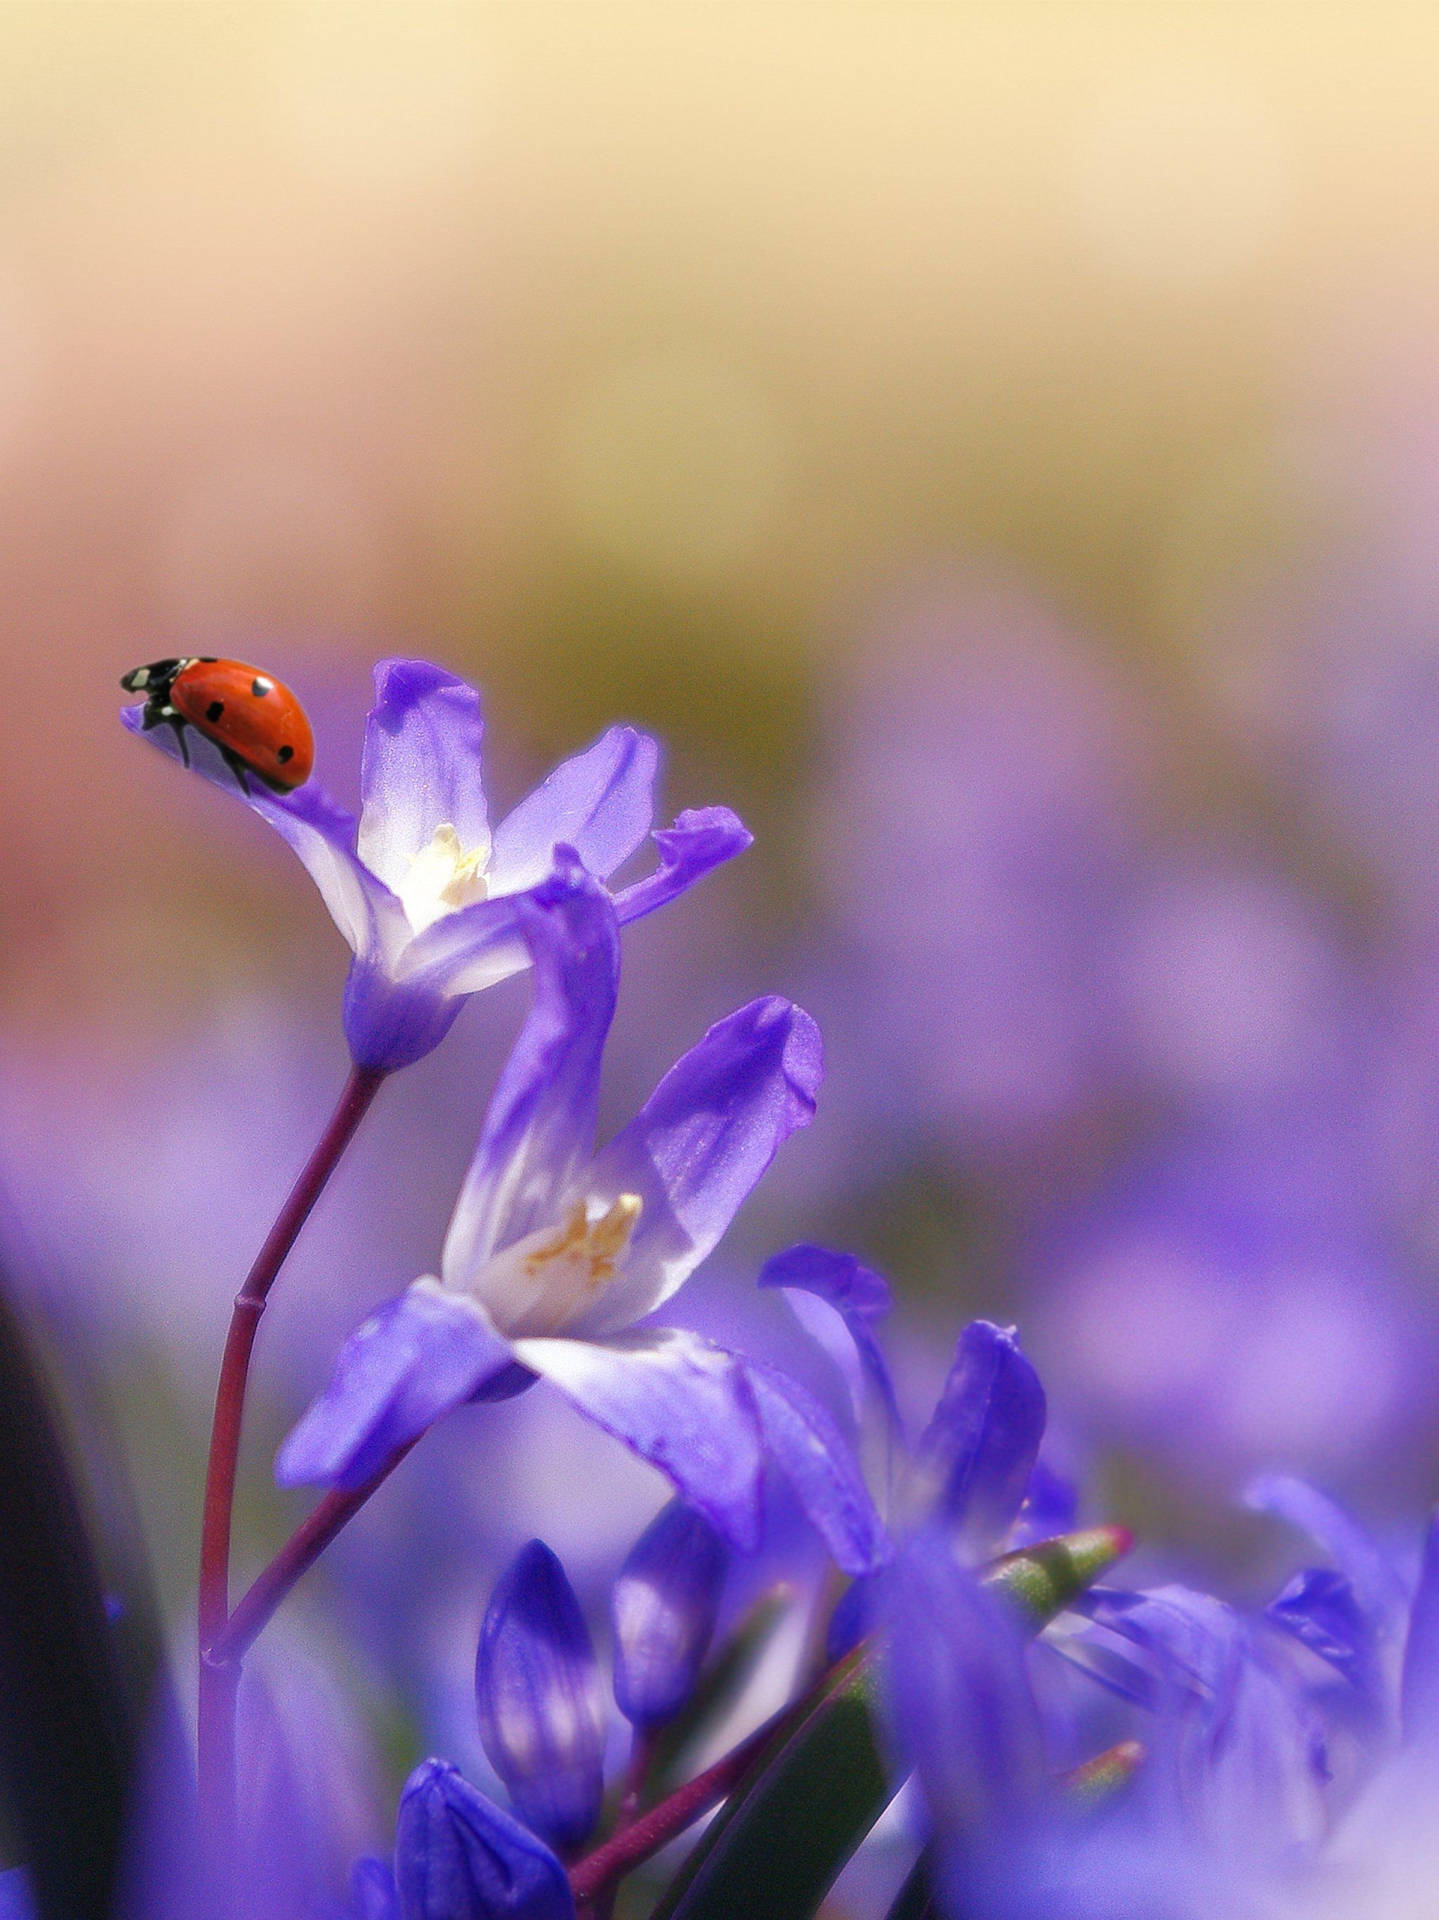 Ladybug On Saffron Crocus Flowers Background